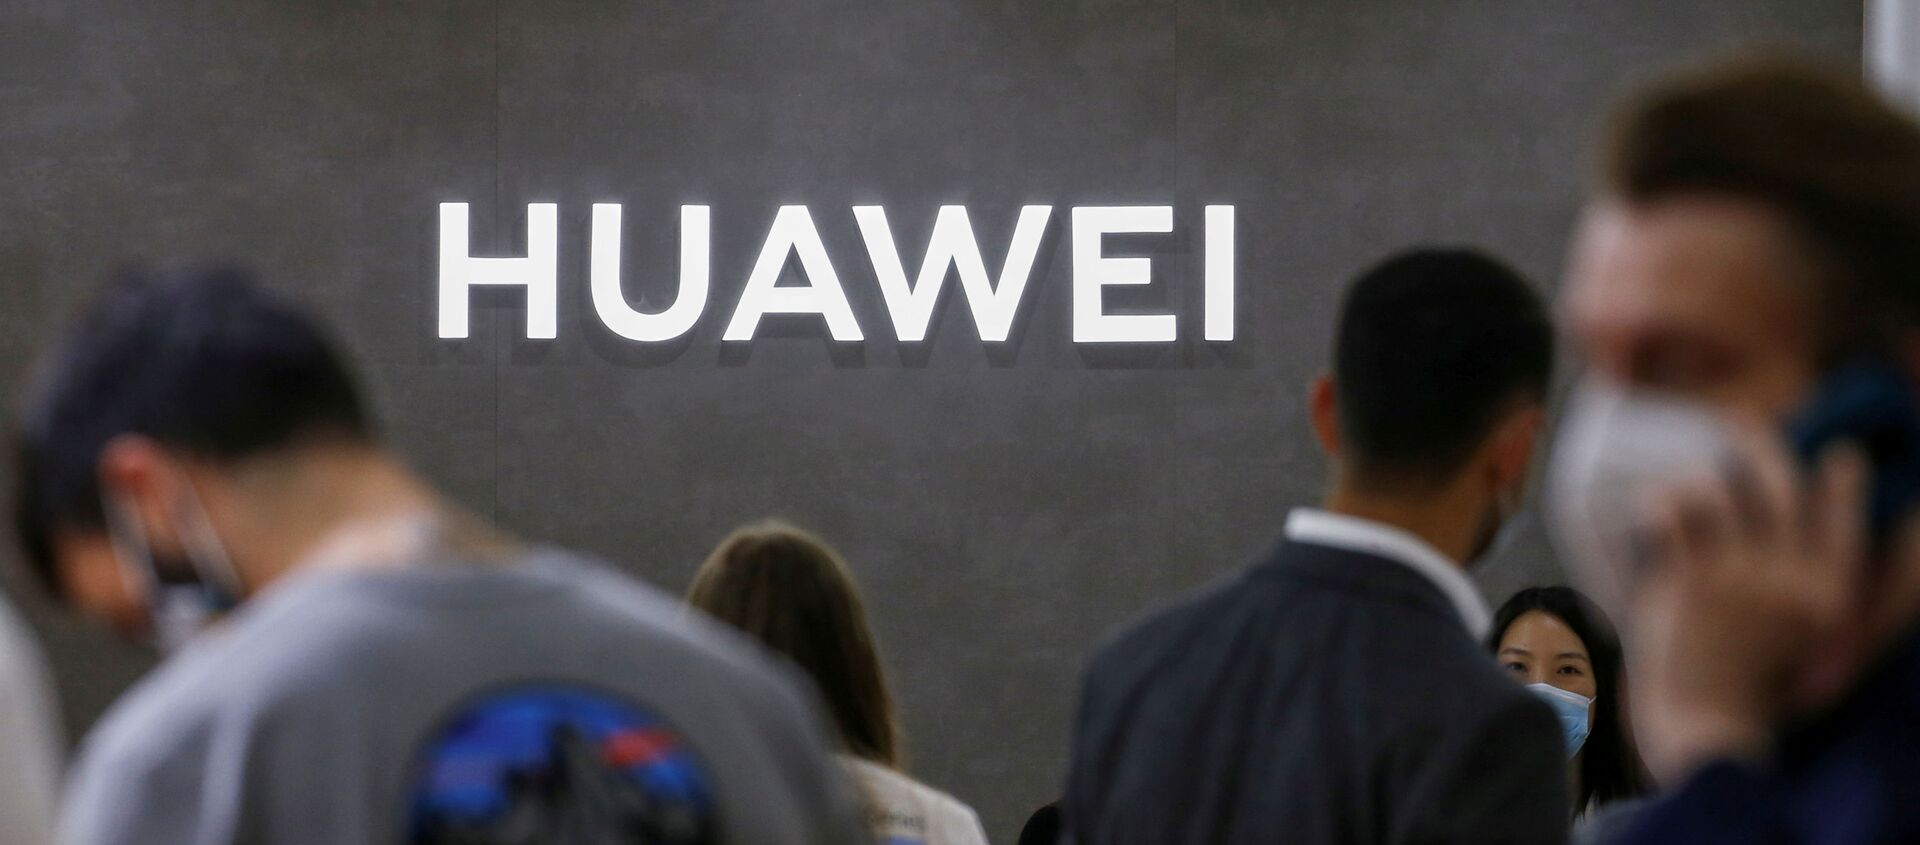 The Huawei logo is seen at the IFA consumer technology fair, amid the coronavirus disease (COVID-19) outbreak, in Berlin, Germany September 3, 2020 - Sputnik International, 1920, 21.10.2020